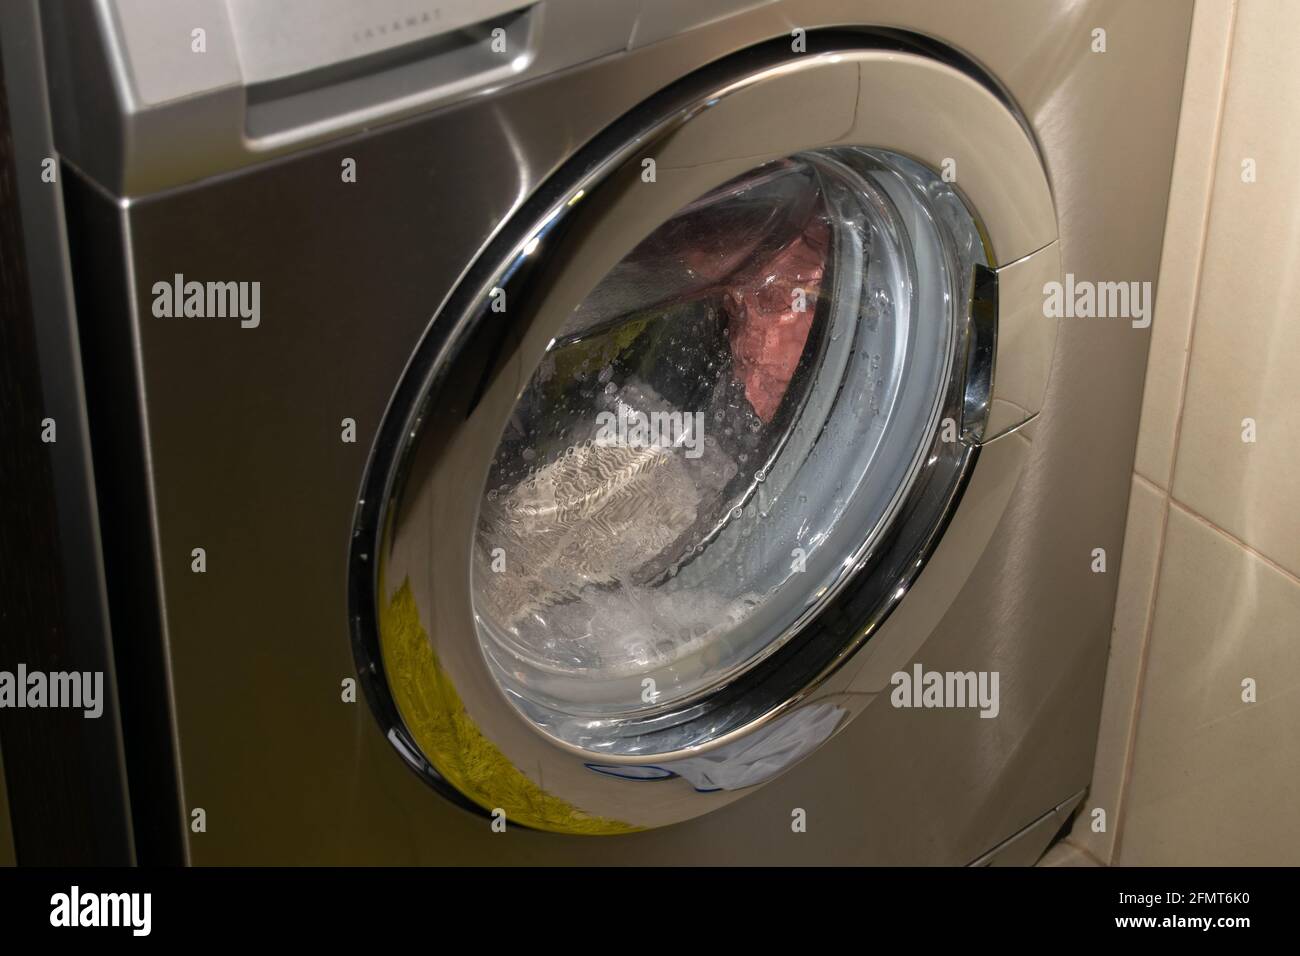 Aeg inox front clothes washing machine on job, how to do Laundry Stock  Photo - Alamy